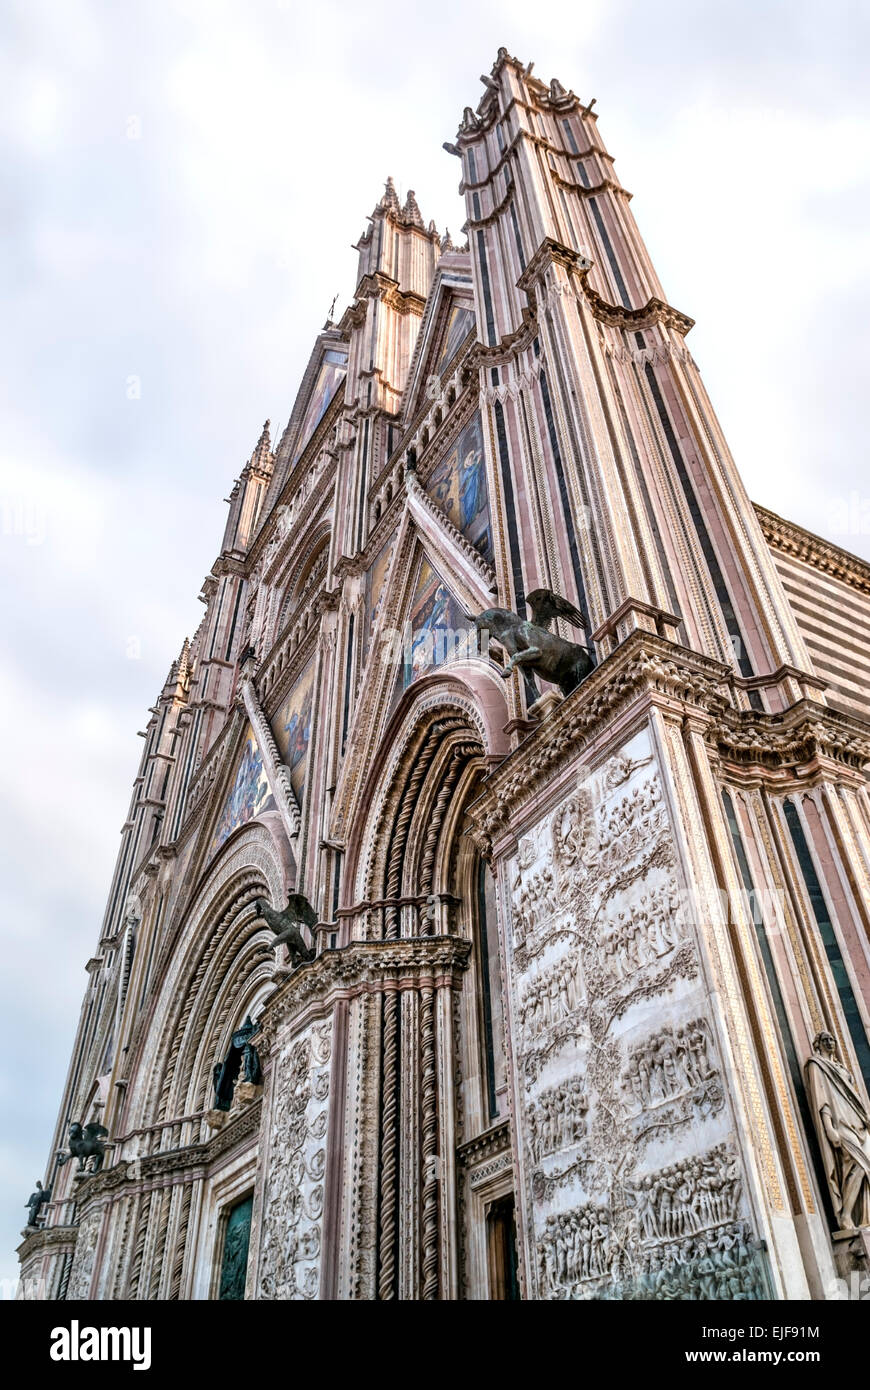 Cathédrale d'Orvieto (Duomo di Orvieto), Orvieto, Ombrie, Italie Banque D'Images